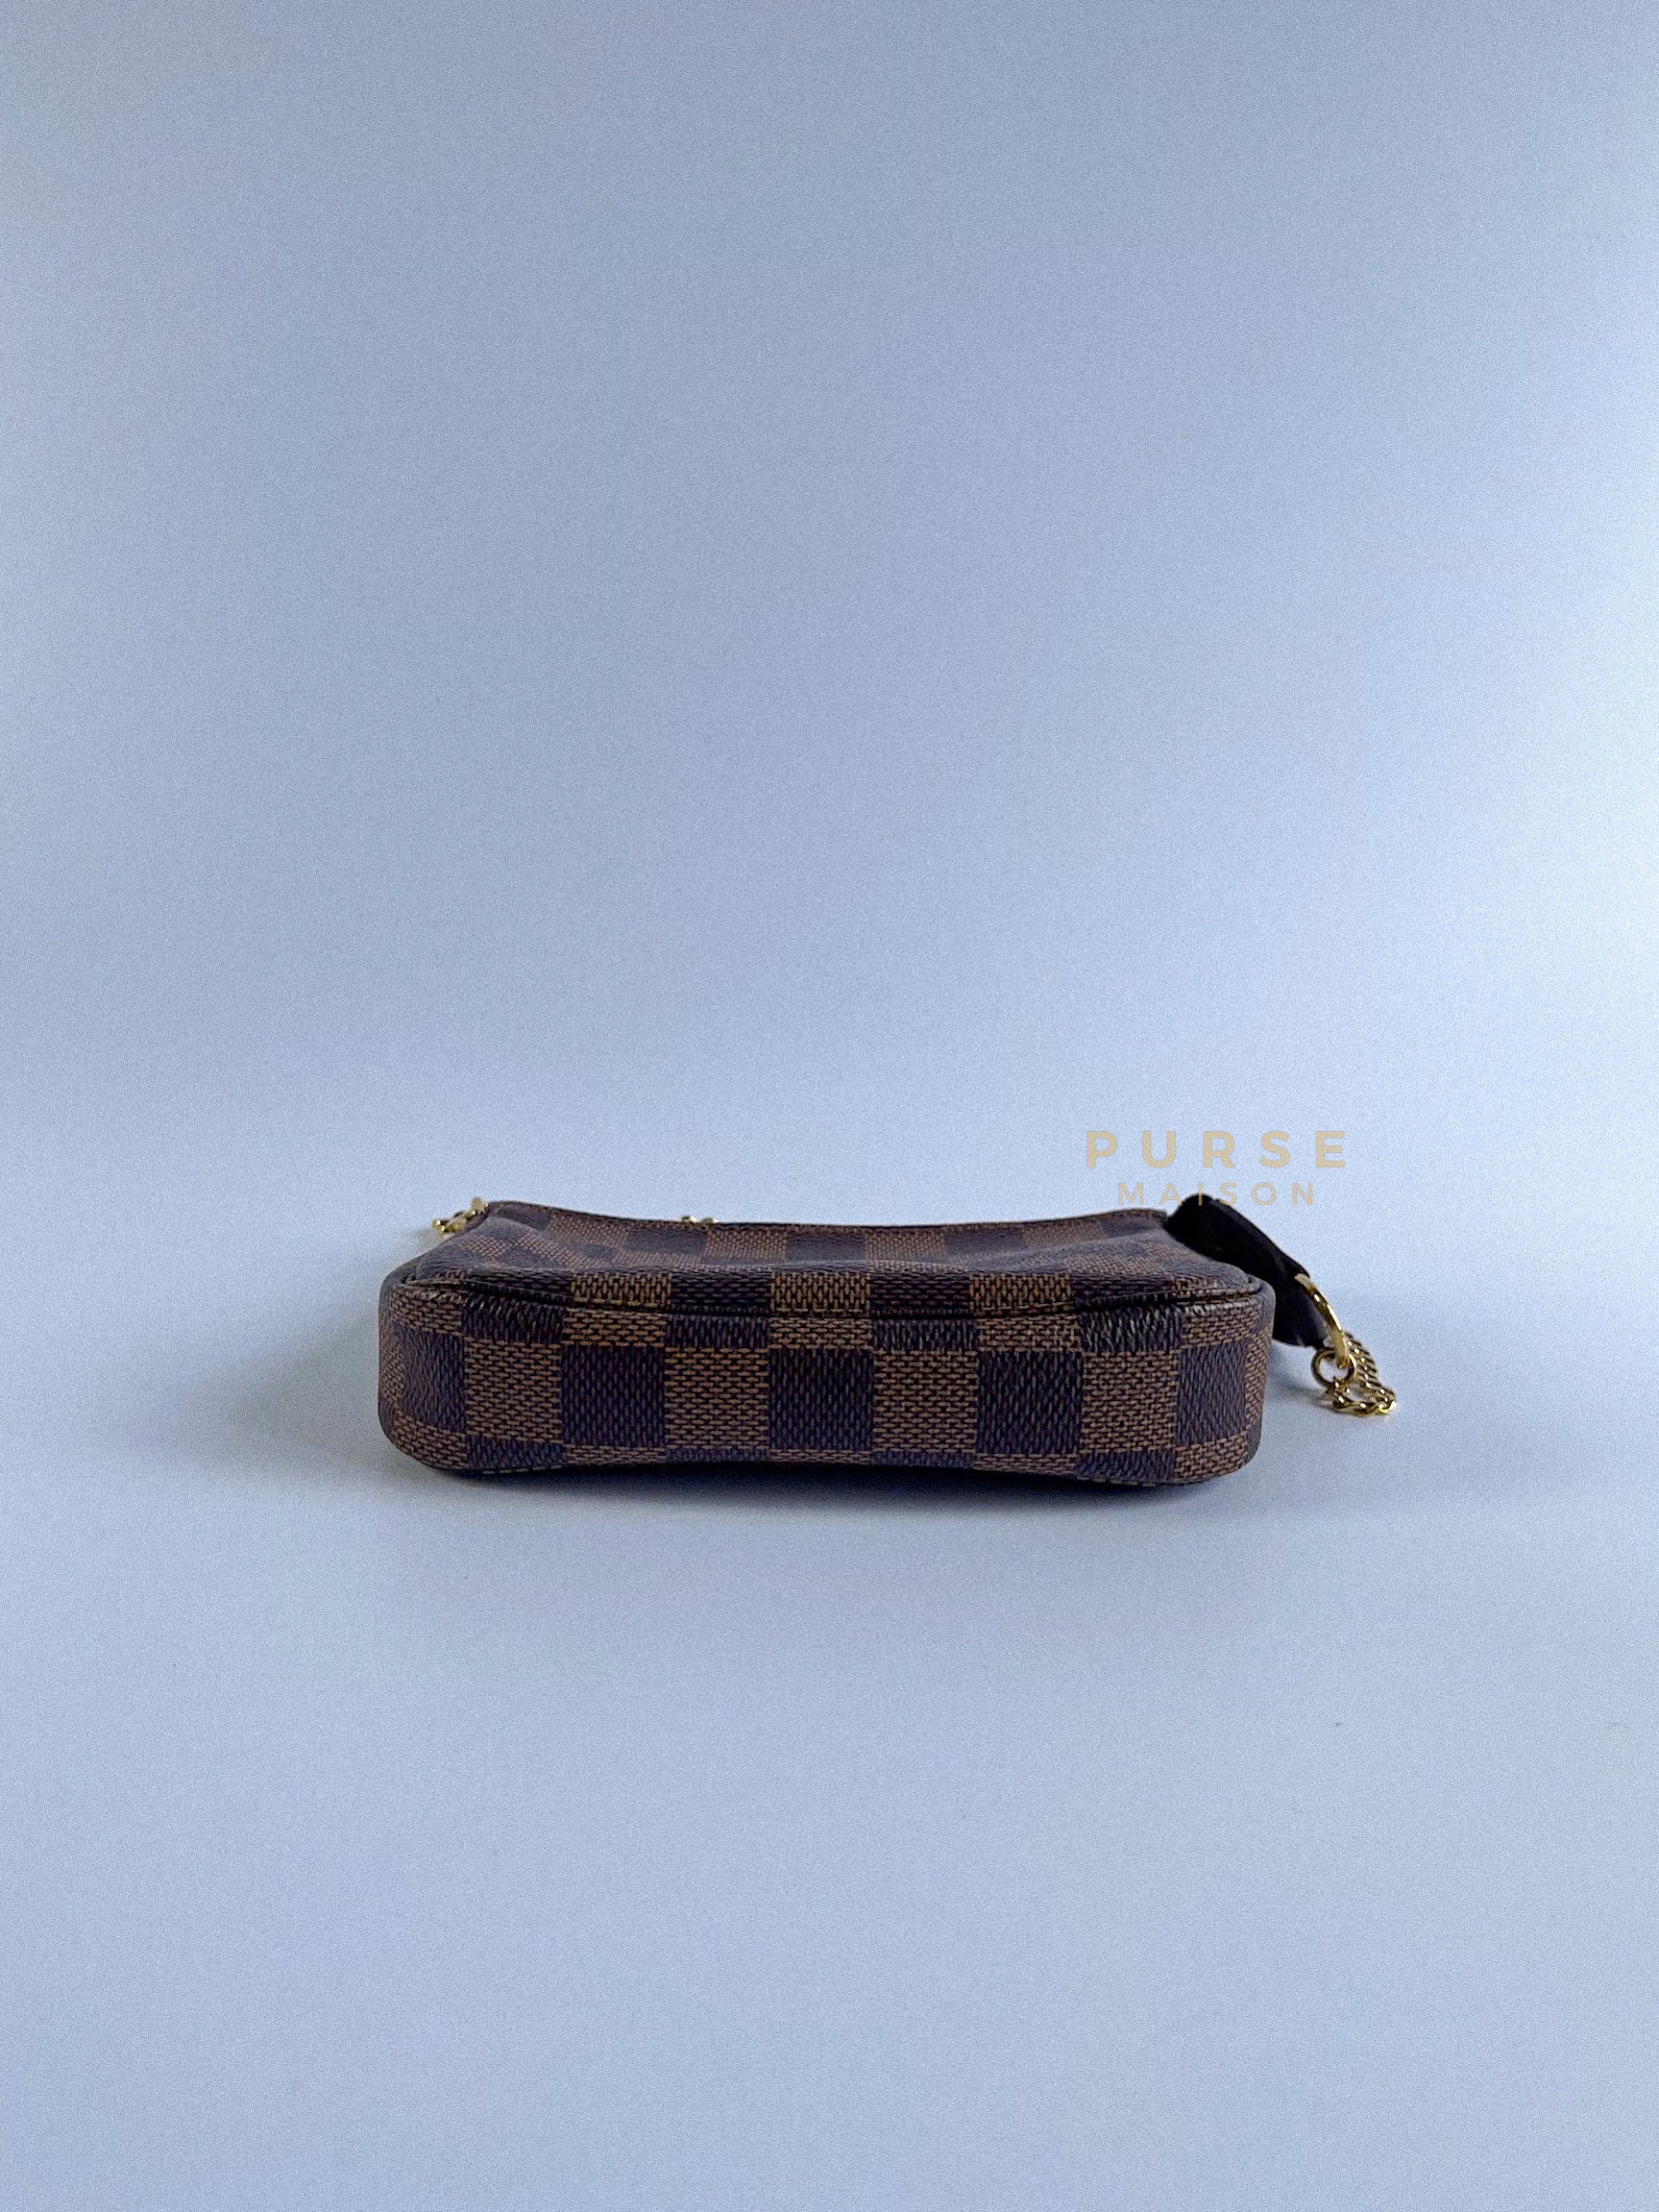 Mini Pochette Damier Ebene Canvas (Date Code: SF0231) | Purse Maison Luxury Bags Shop